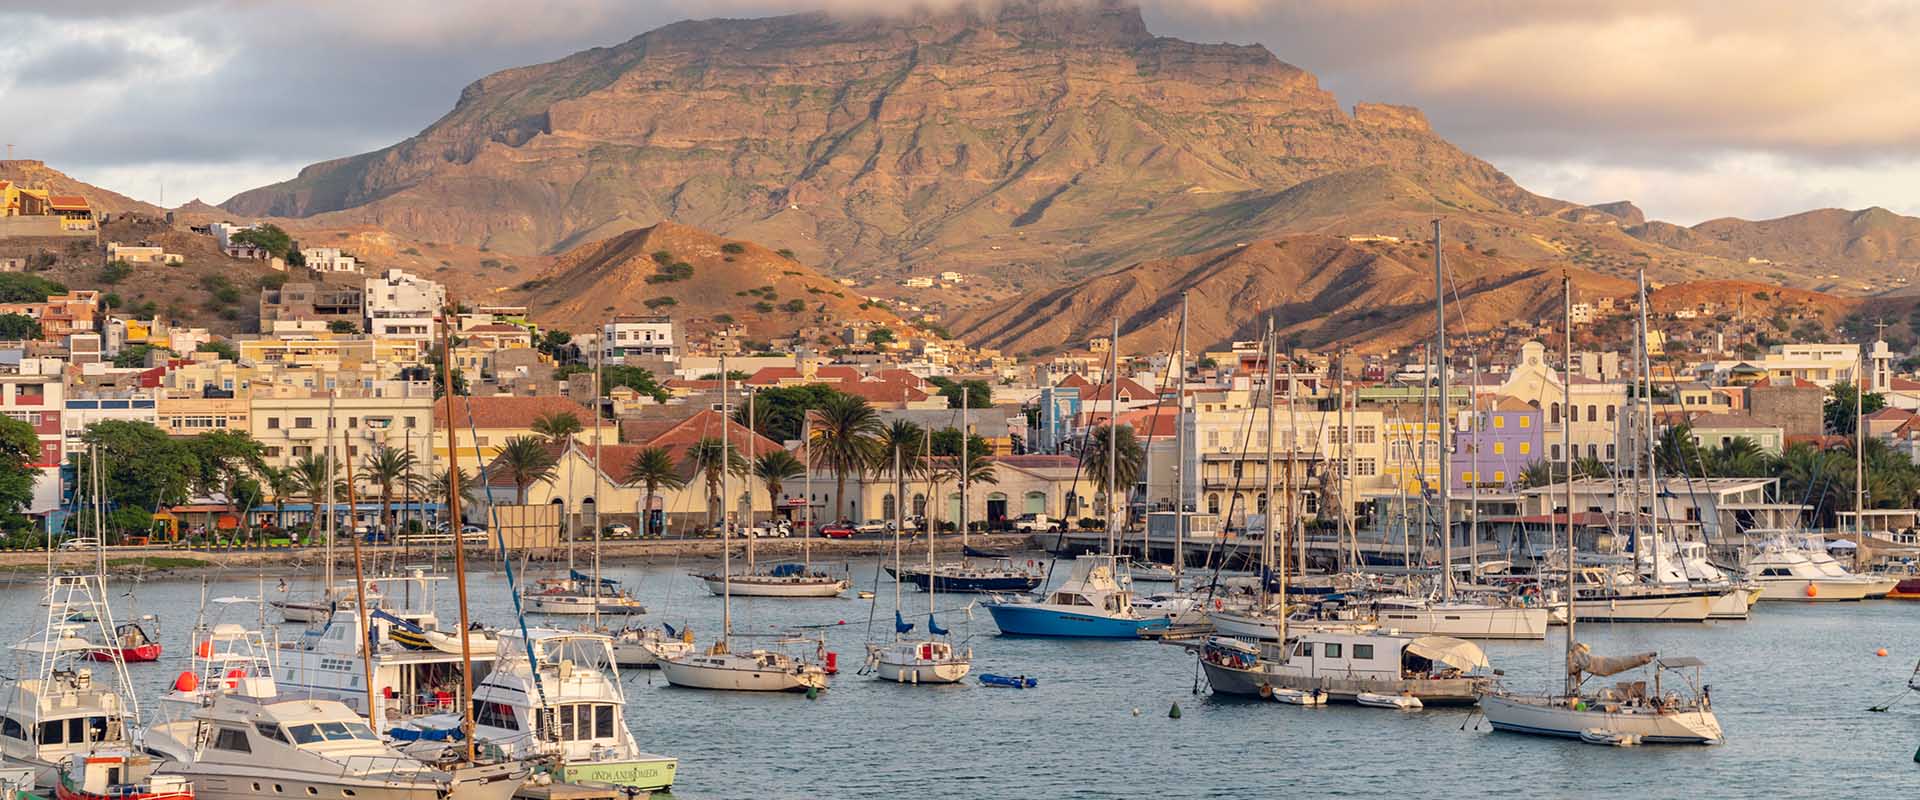 Cruceros de Aventura en Cabo Verde - LiveAboard.com